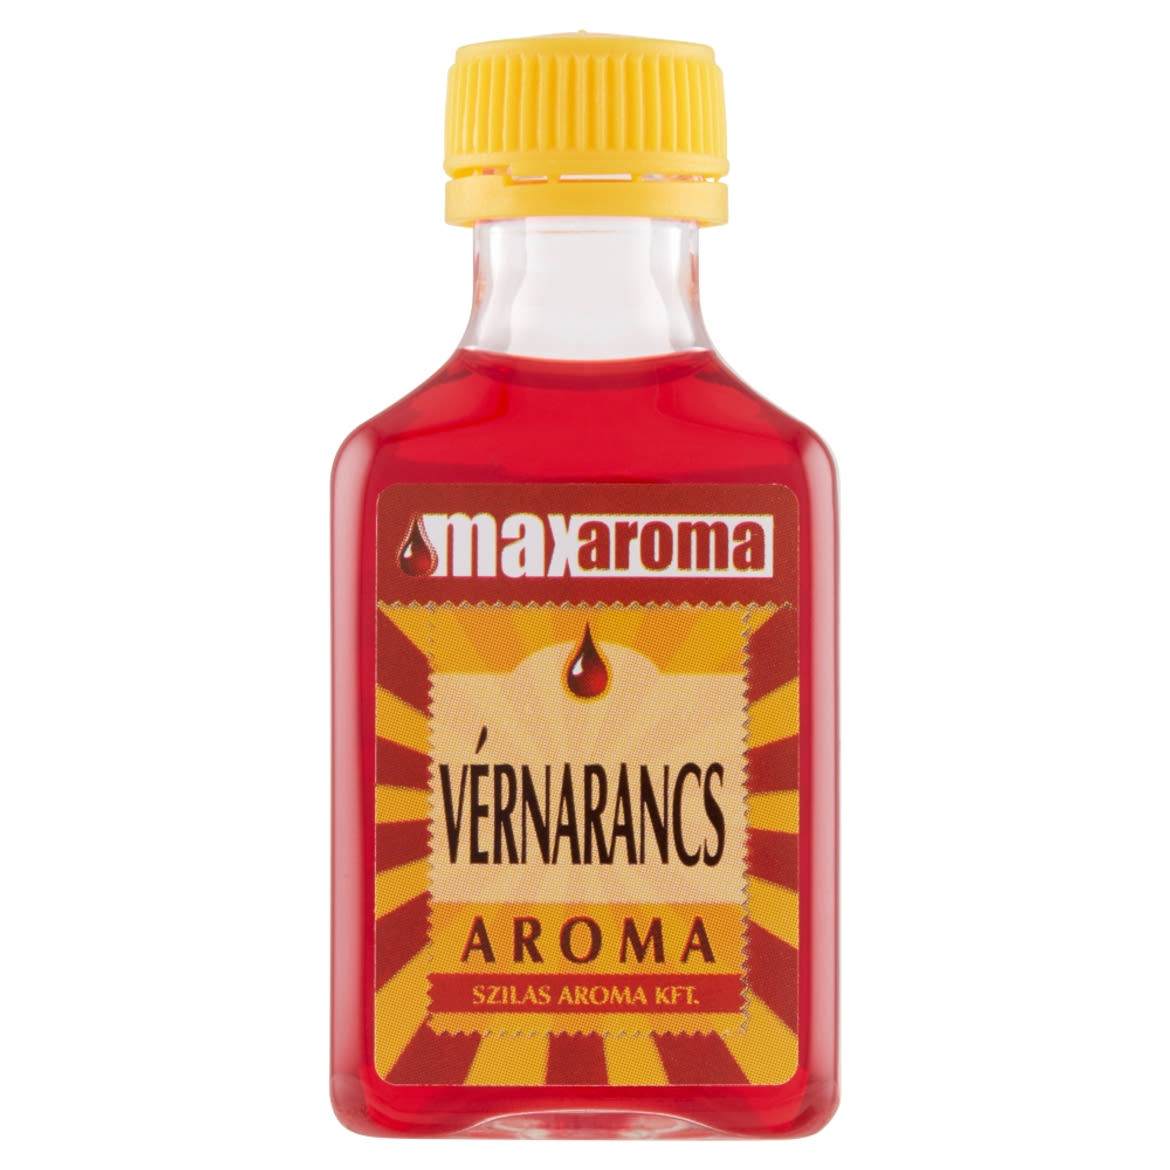 Max Aroma vérnarancs aroma